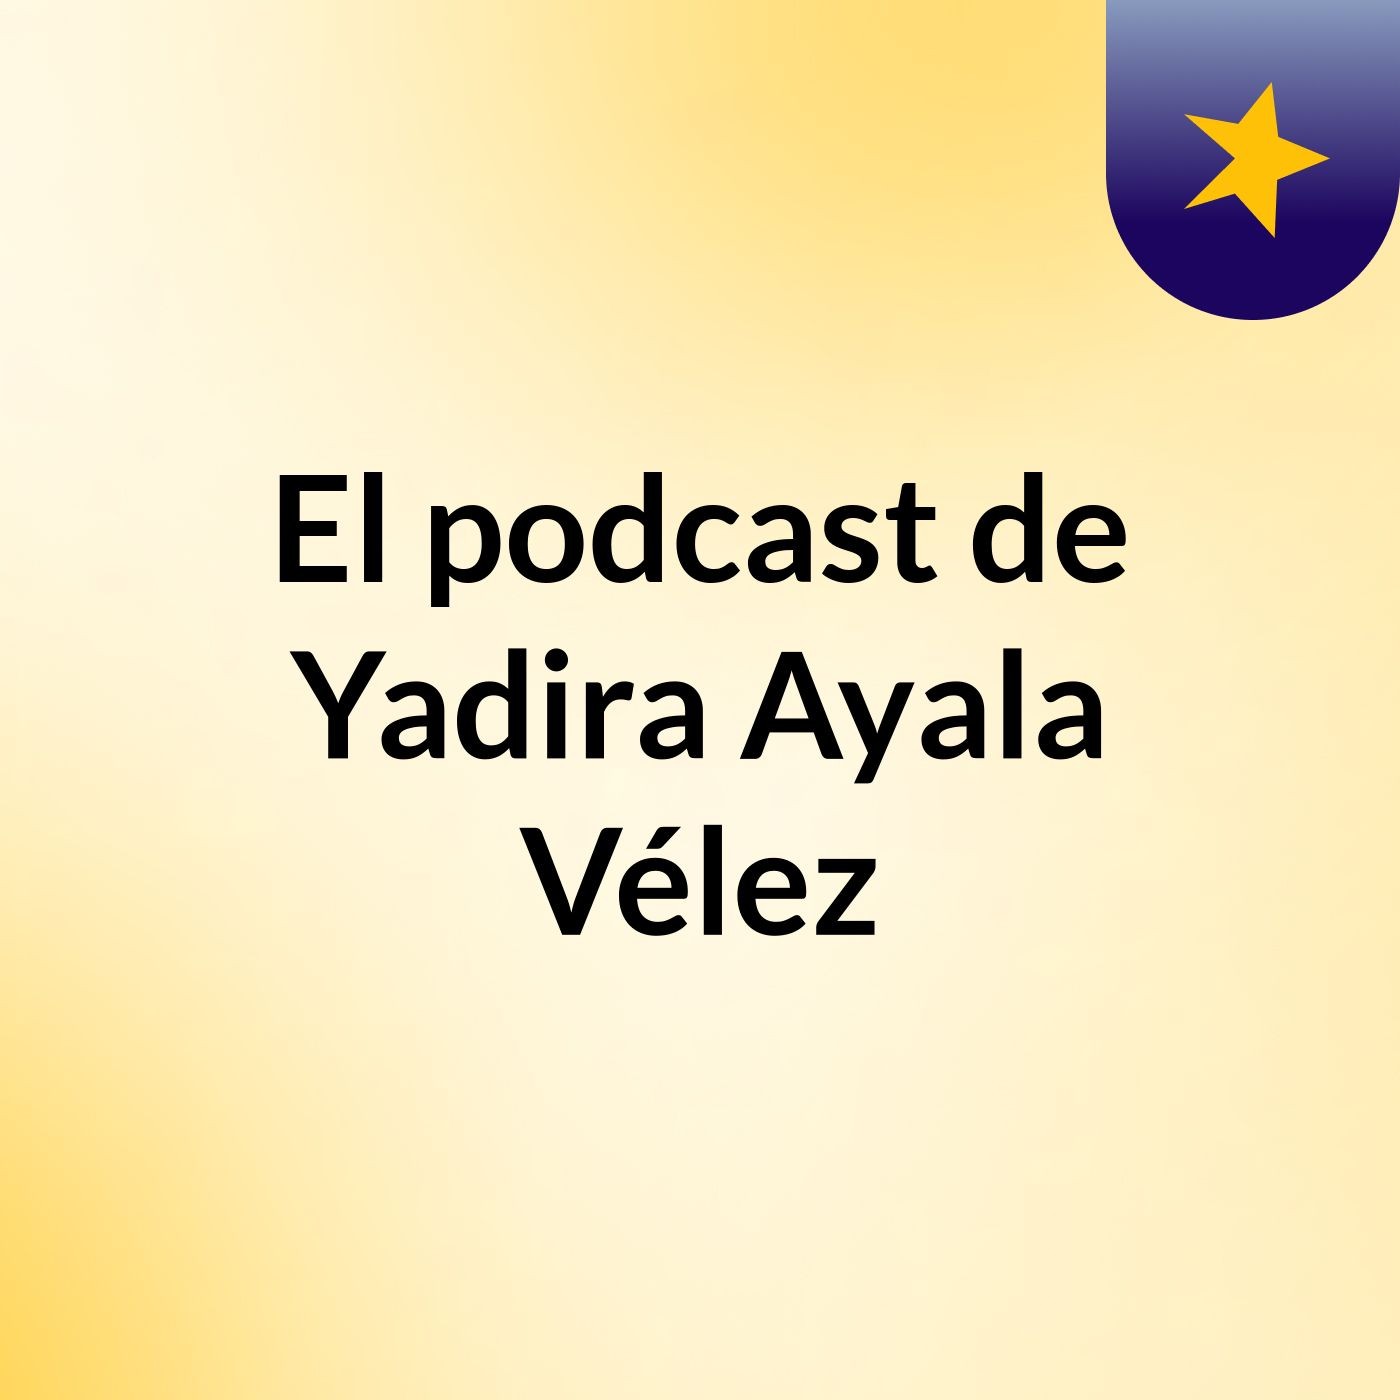 Episodio 3 - El podcast de Yadira Ayala Vélez